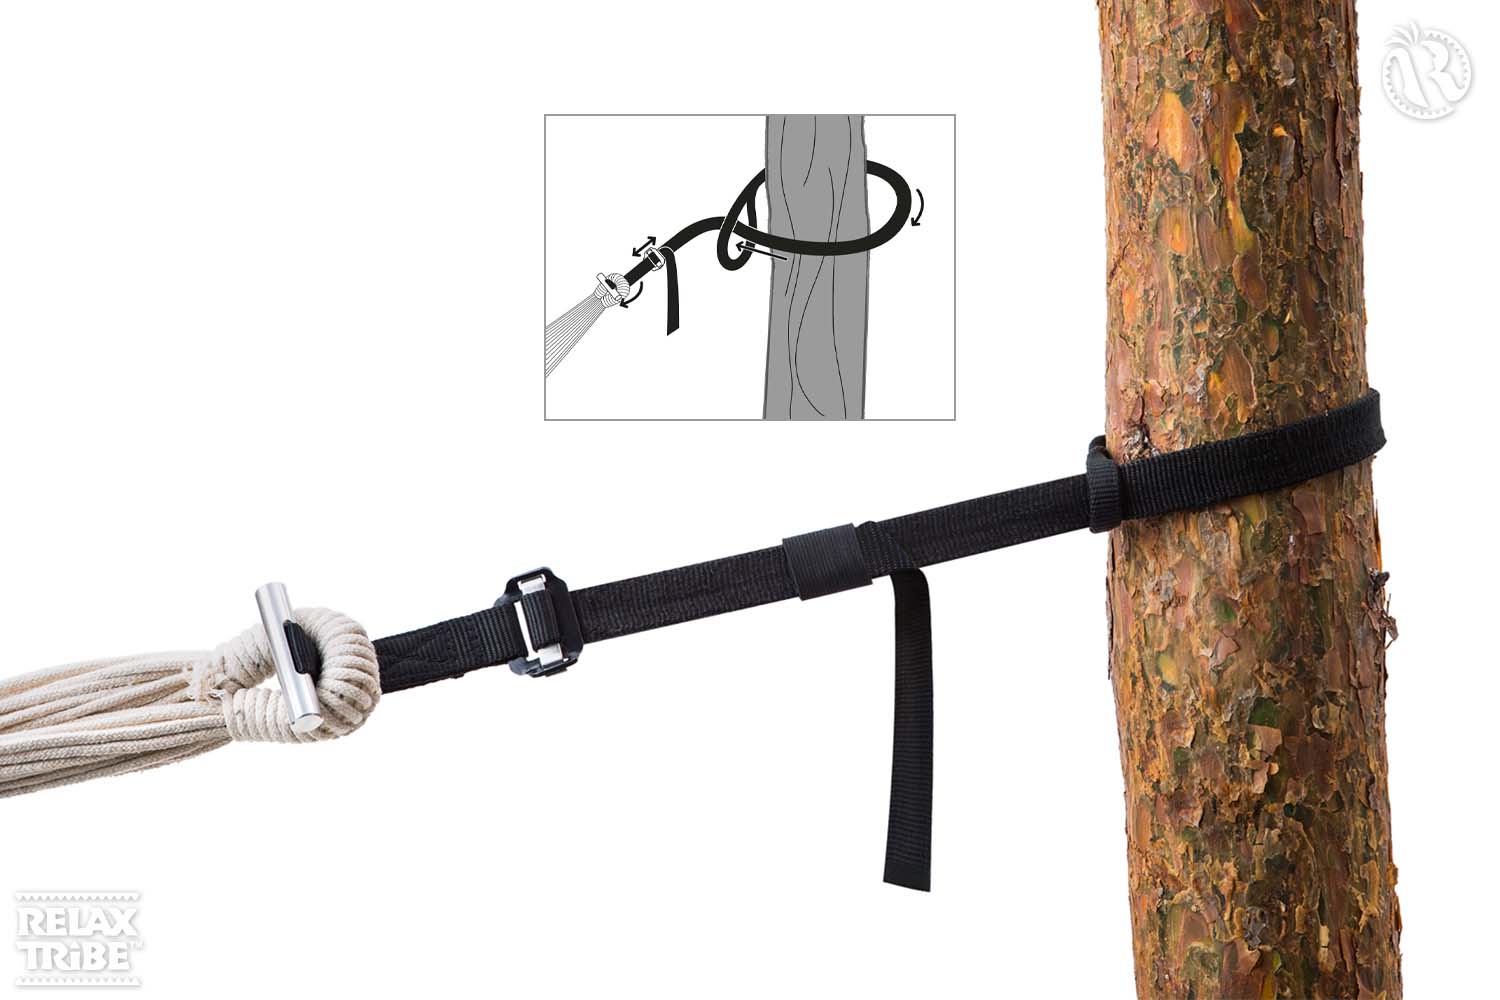 t-strap-adjustable-suspension-system-set-with-tree-friendly-straps-max-200kg-2x-220cm-for-hammock-weatherproof-black-instructions